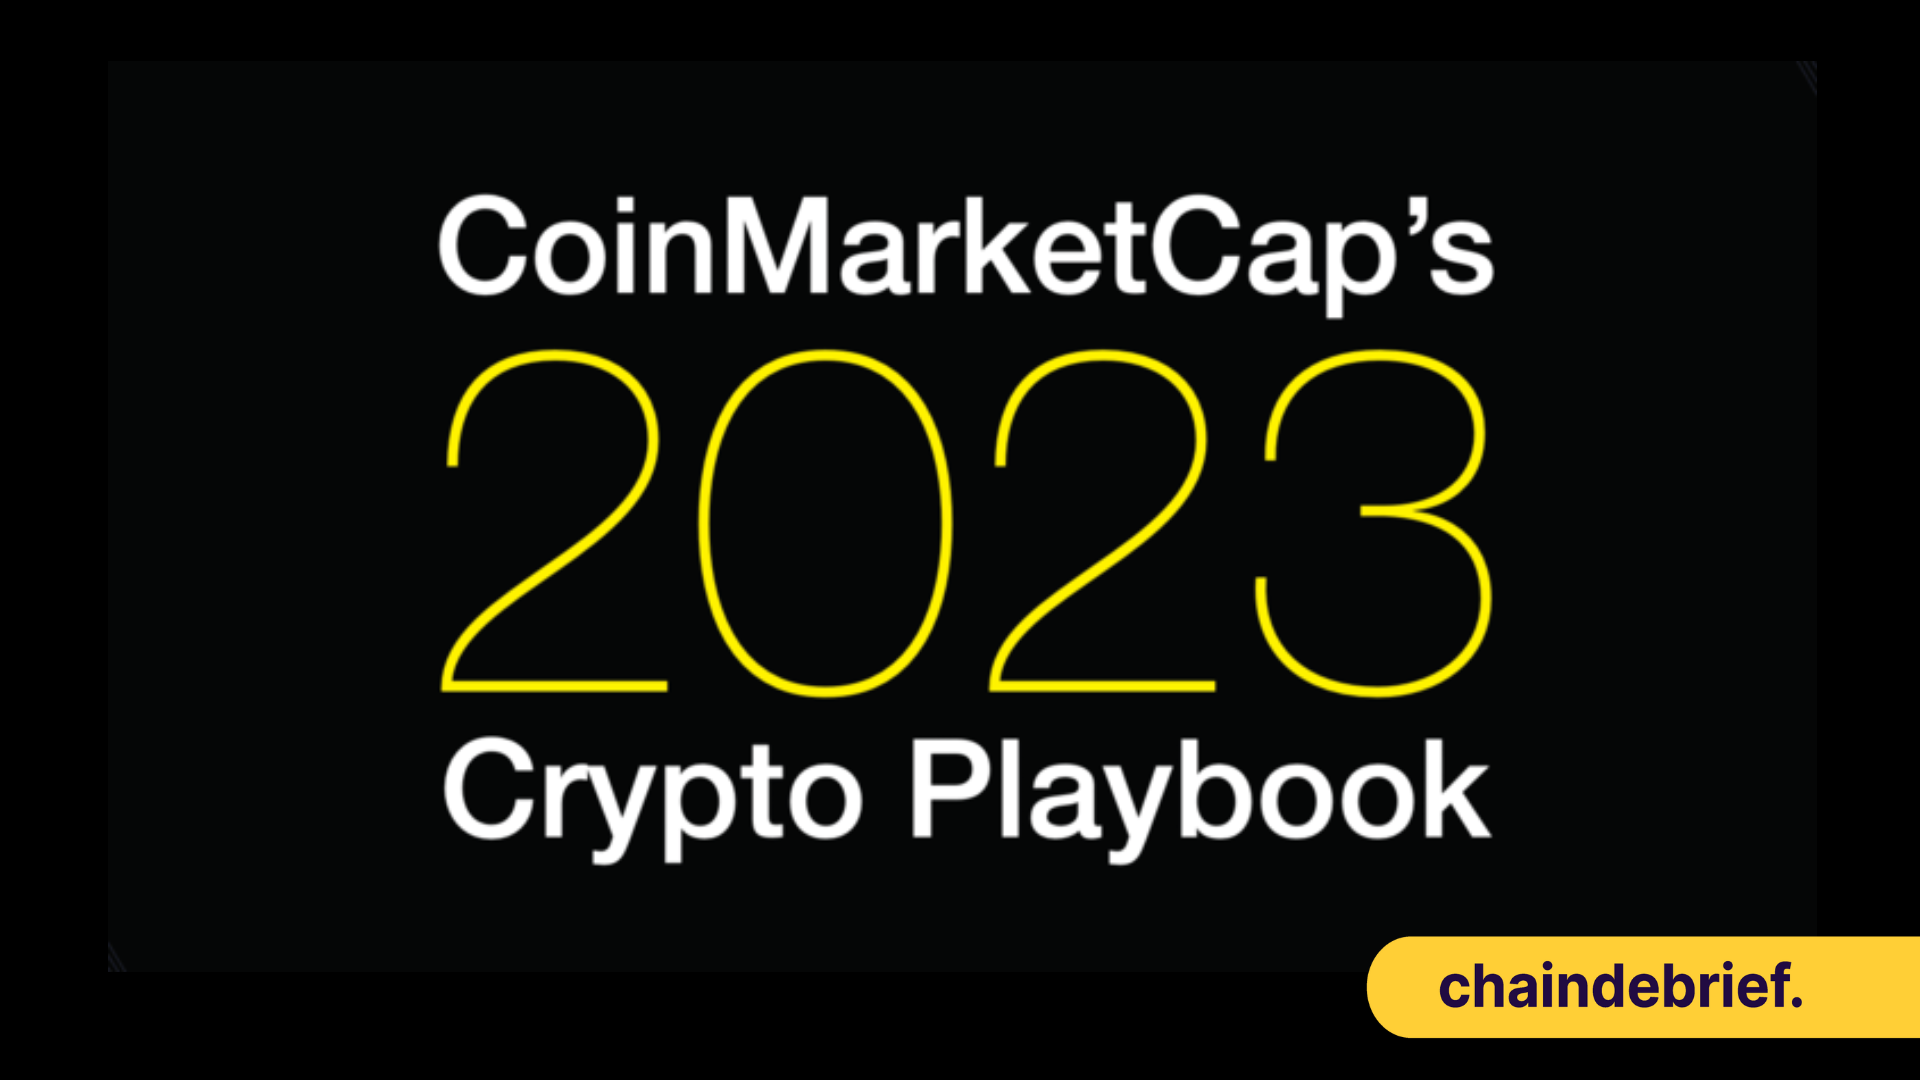 3 Key Takeaways From CoinMarketCap 2023 Crypto Playbook